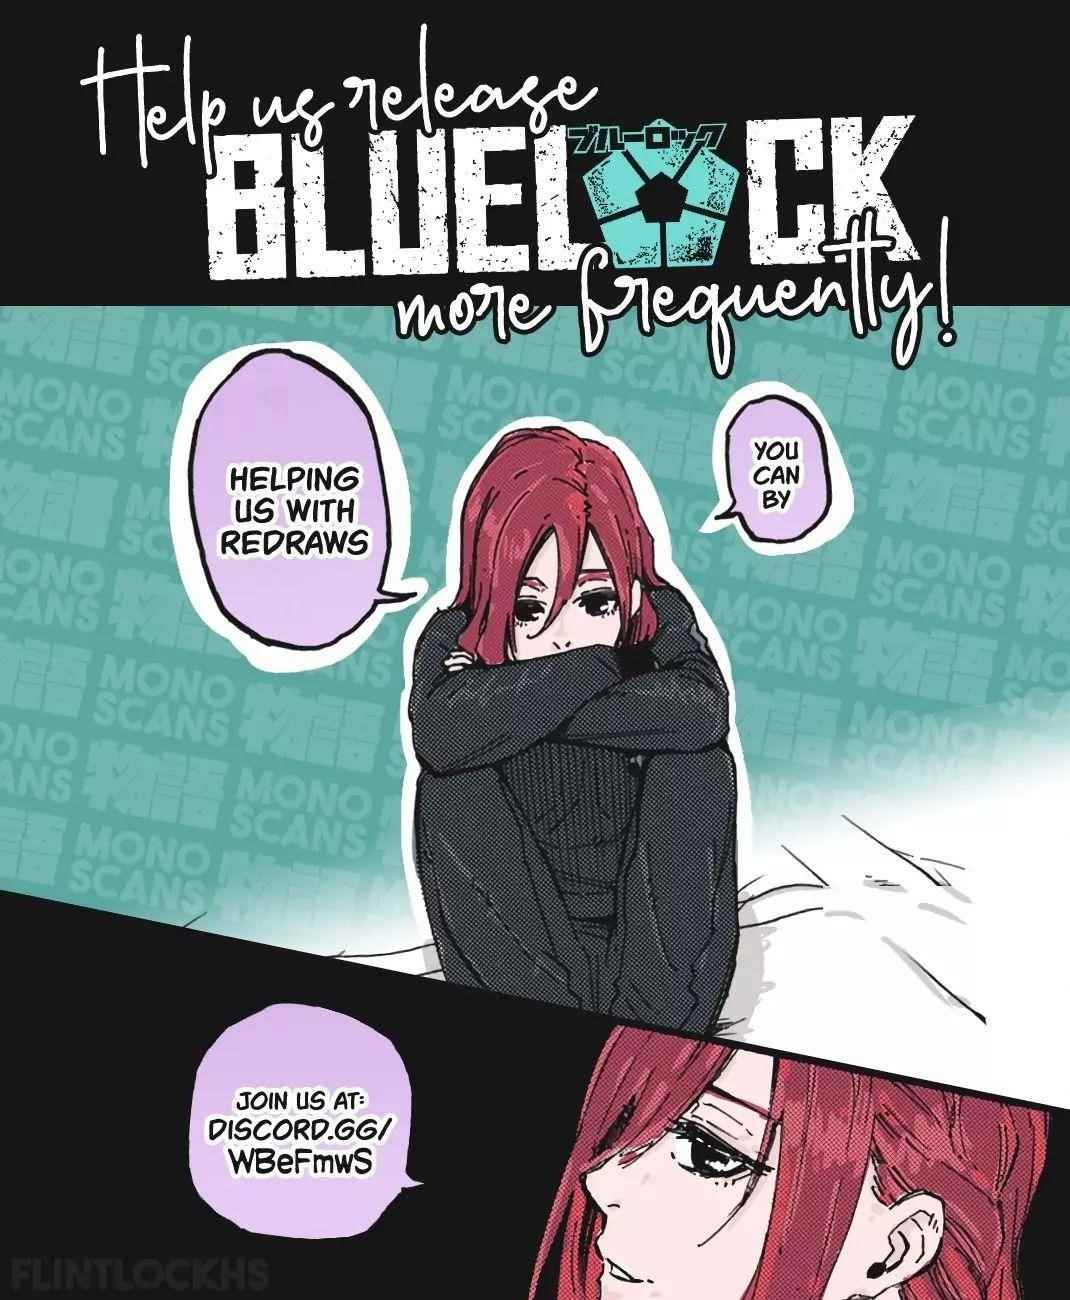 Blue Lock, Chapter 25 - Blue Lock Manga Online